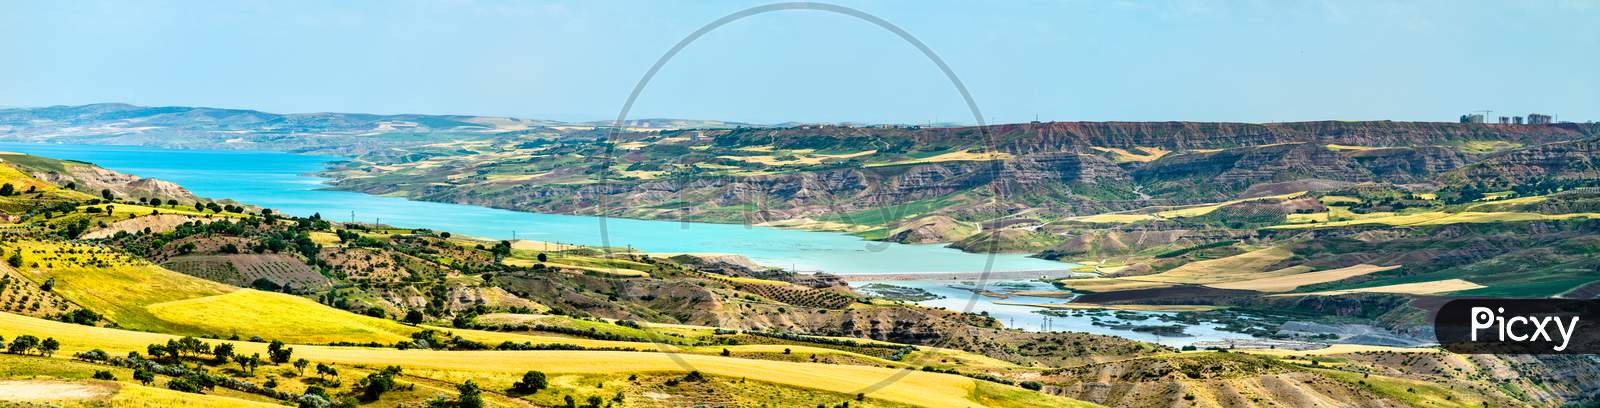 The Ataturk Dam Lake On The Euphrates River In Southeastern Turkey